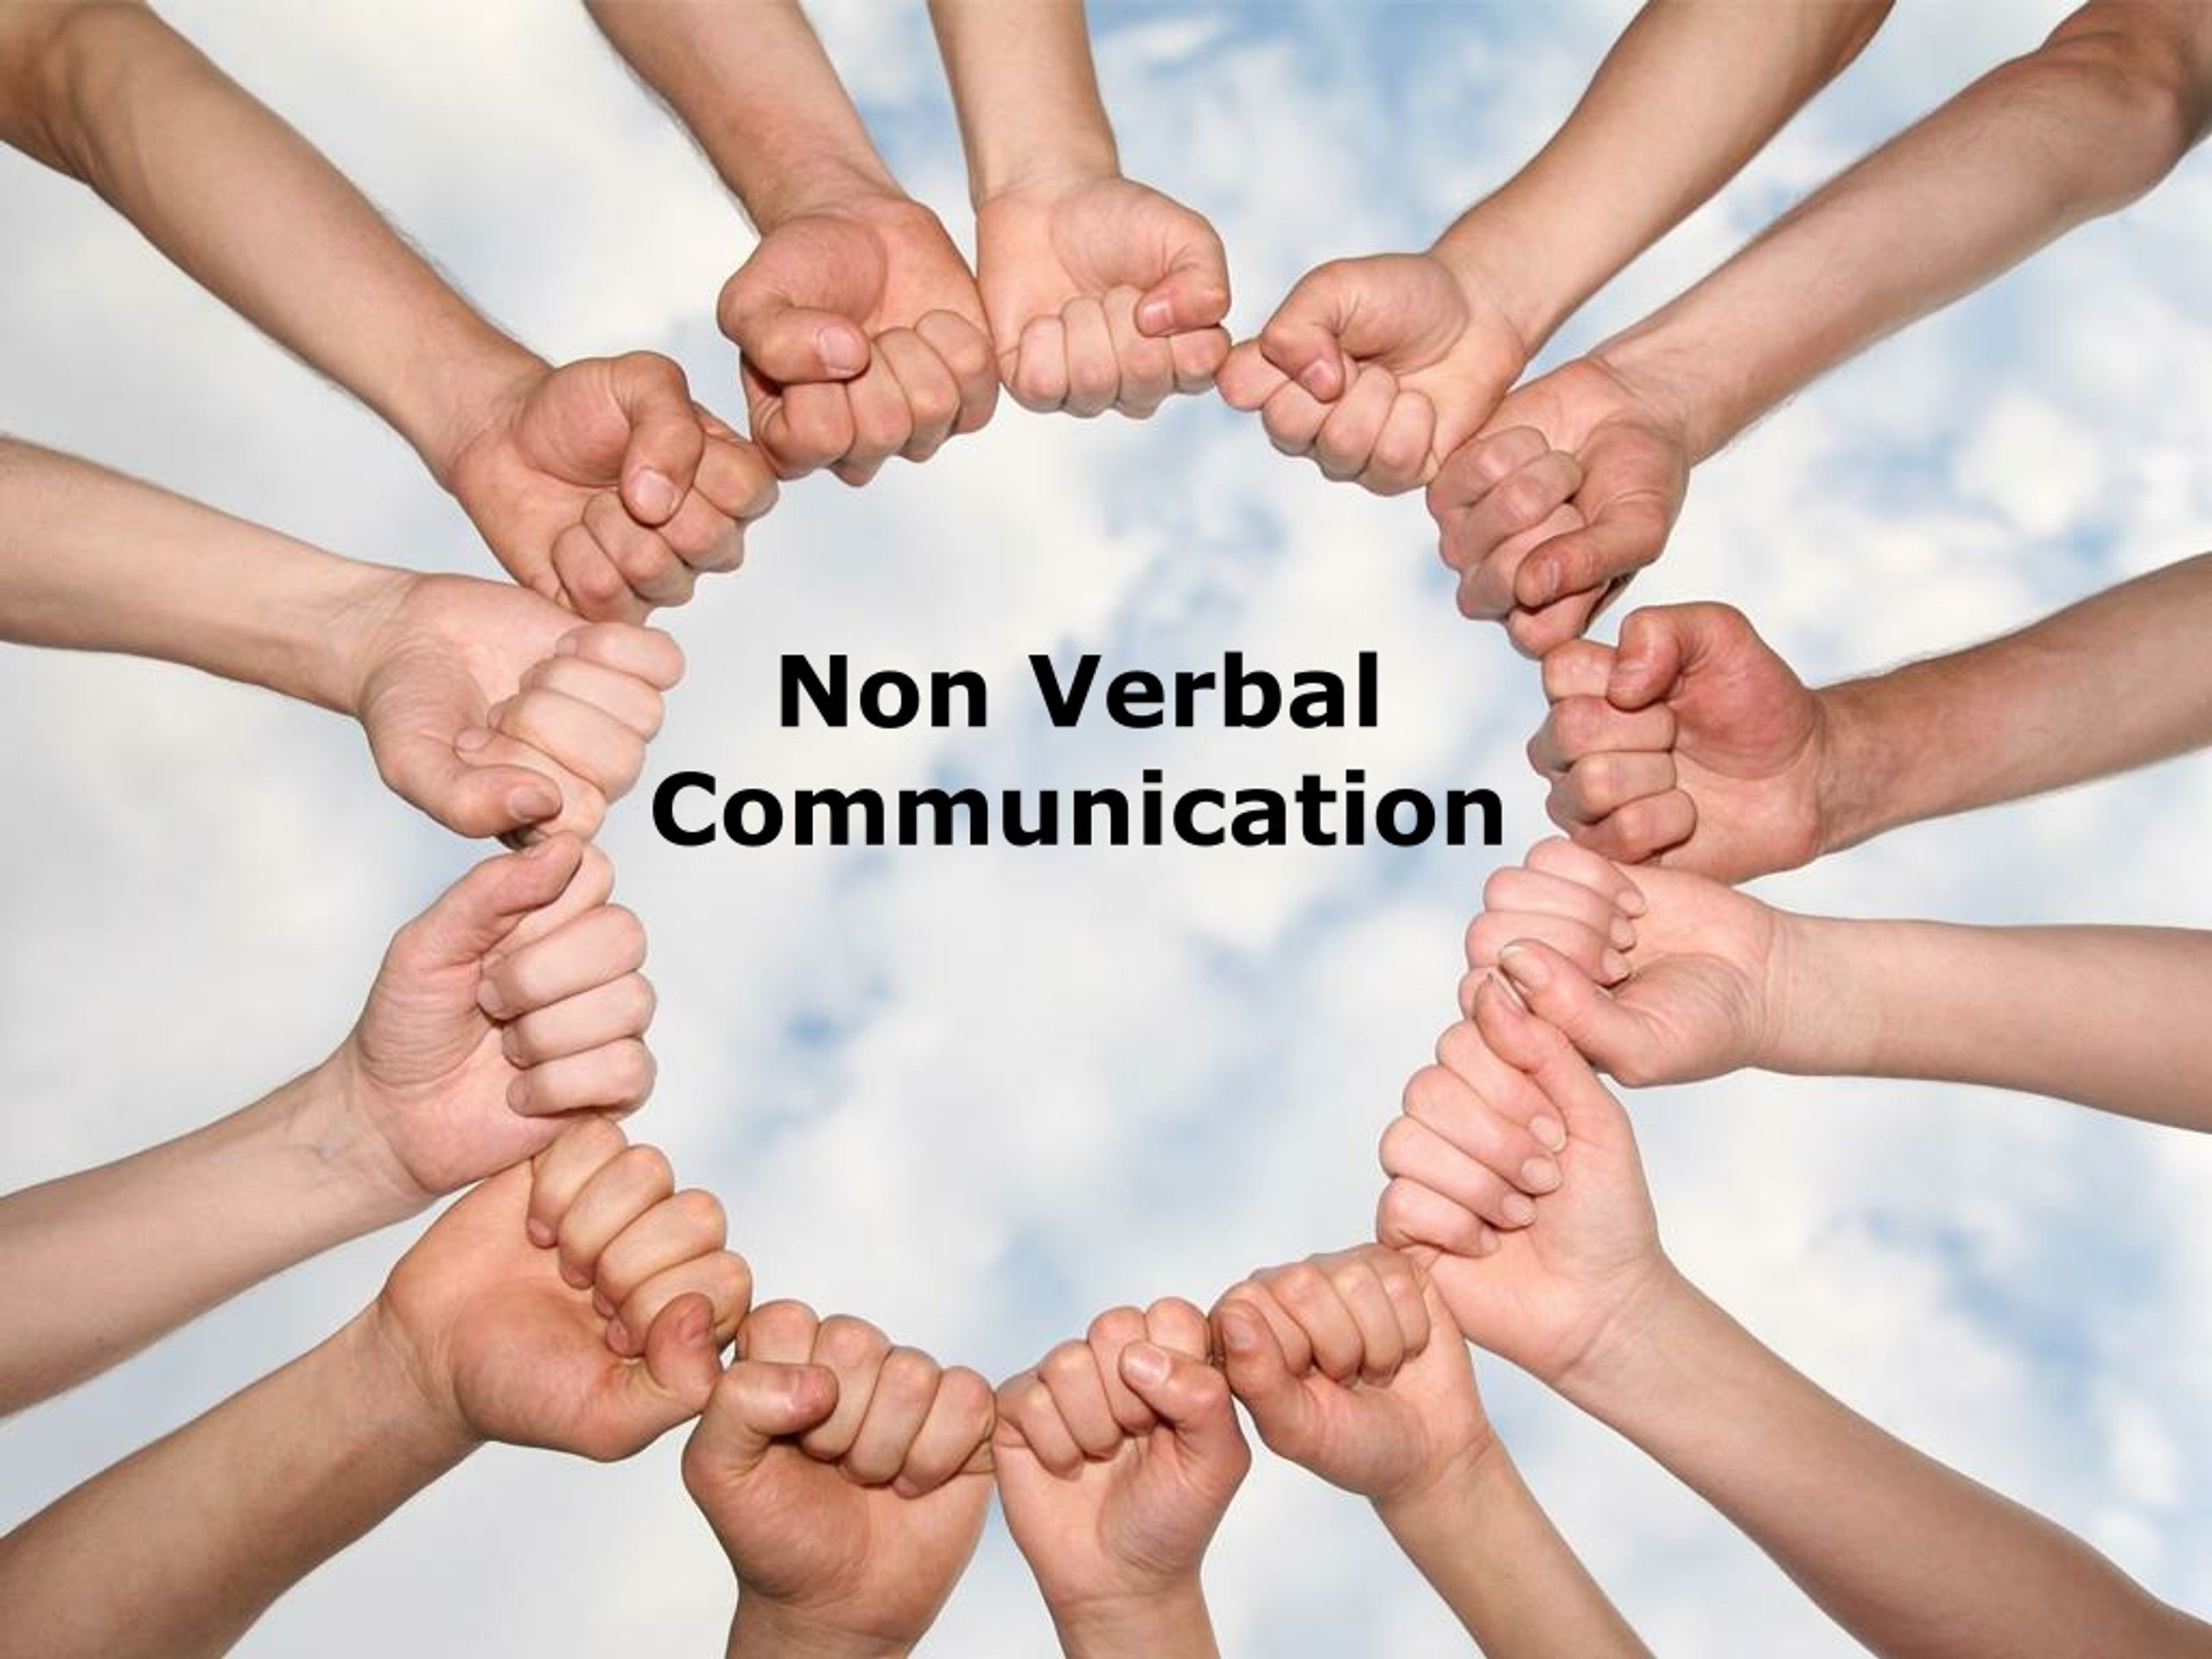 presentation on non verbal communication